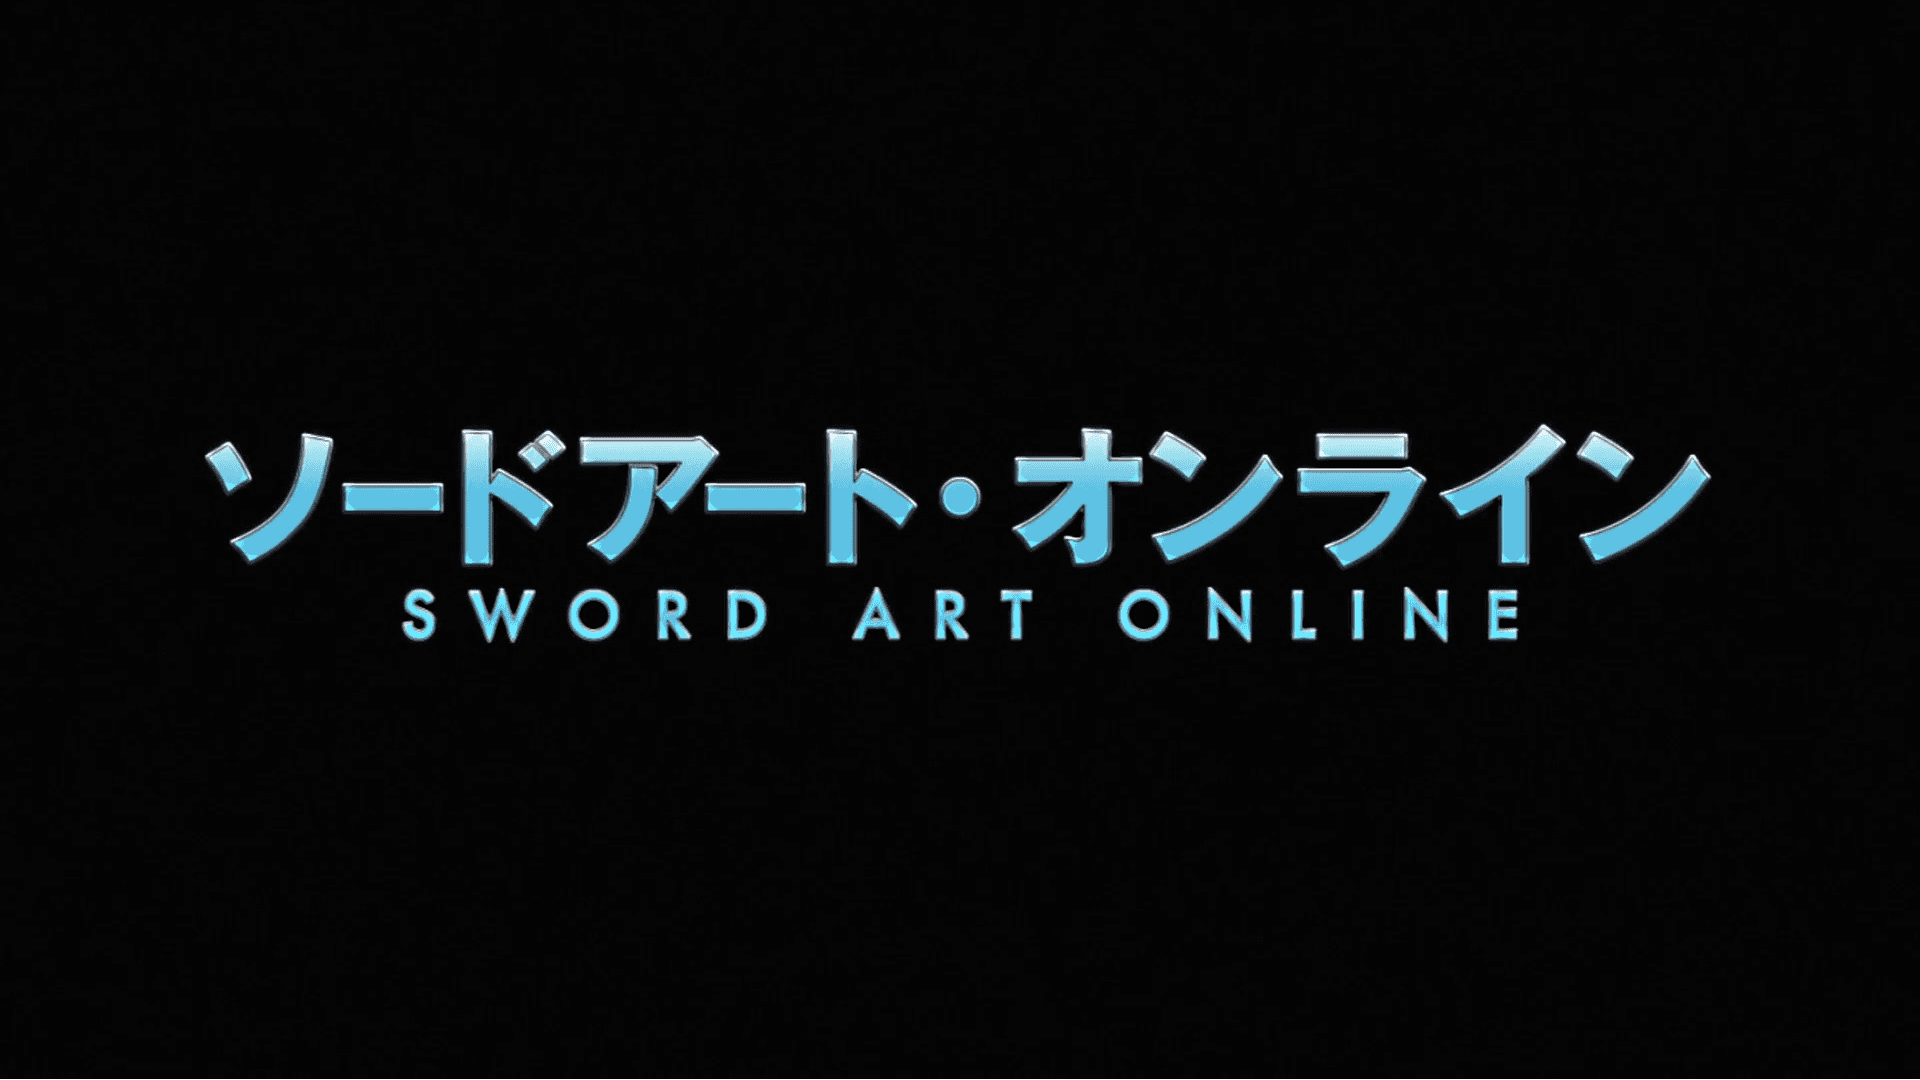 Protagonists Of Sword Art Online In An Epic Battle